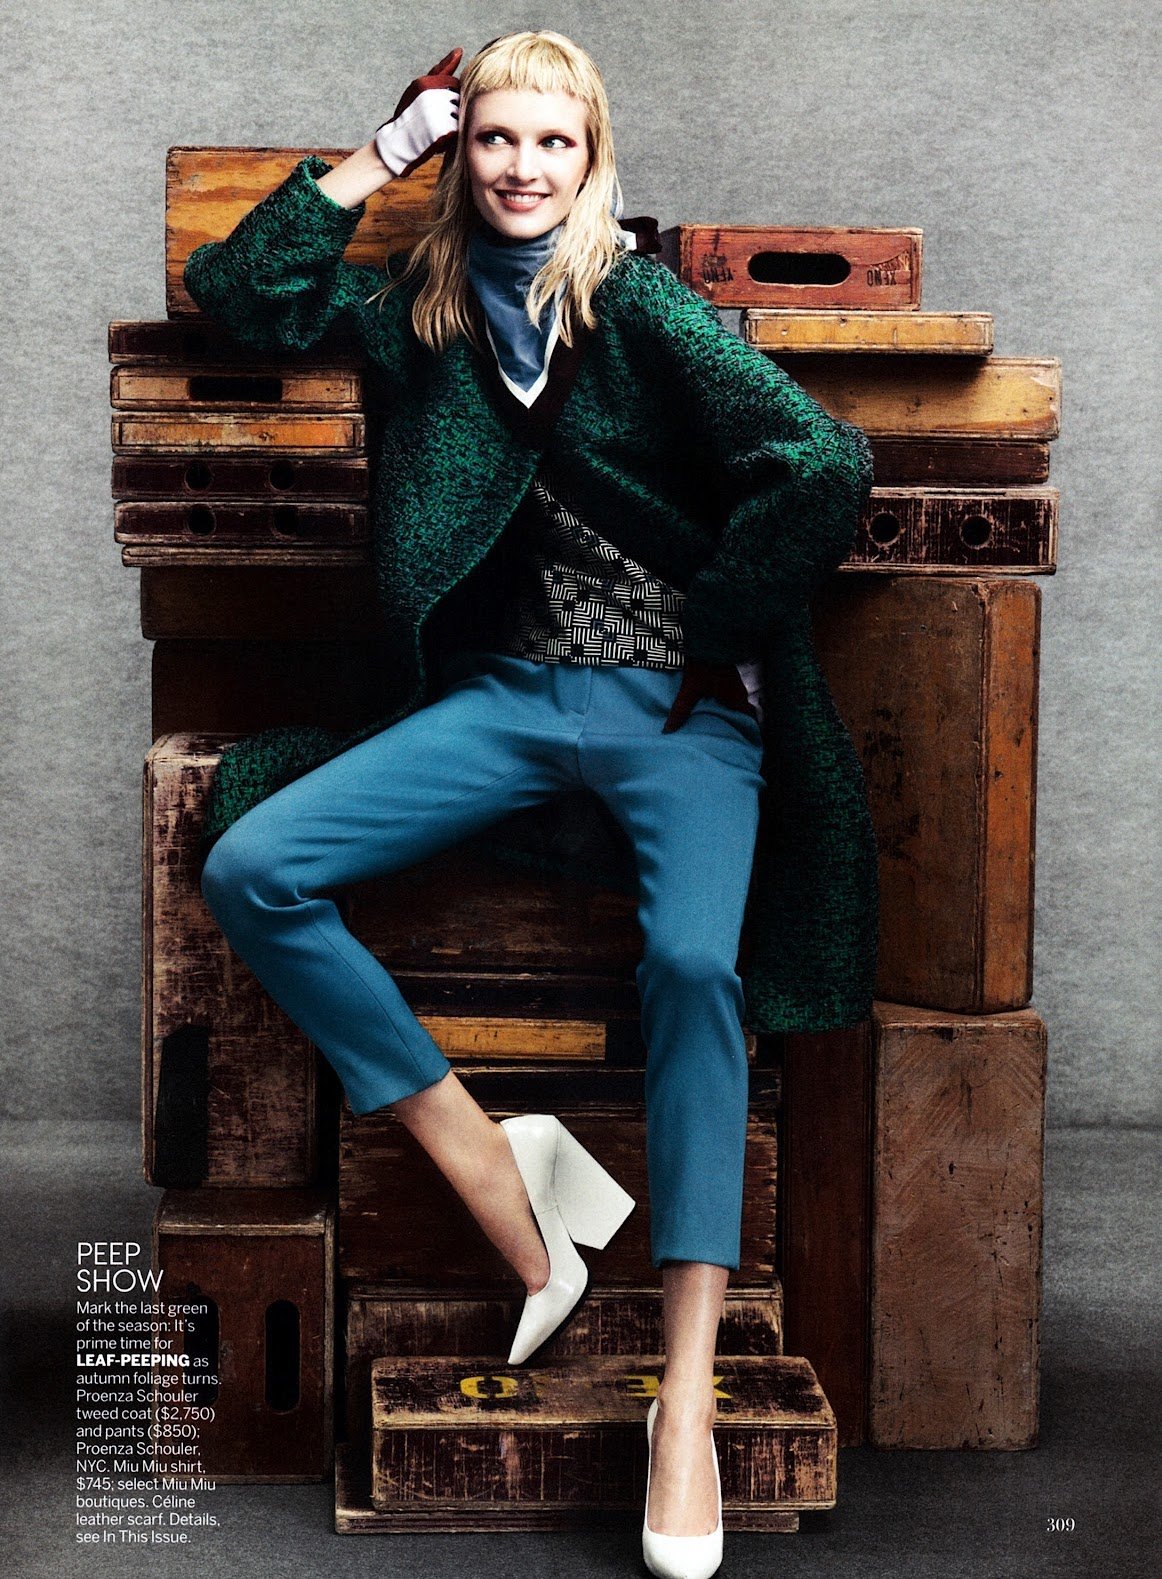 Karlie-Kloss-Daria-Strokous-by-Craig-McDean-Vogue-October-2012-6.jpg